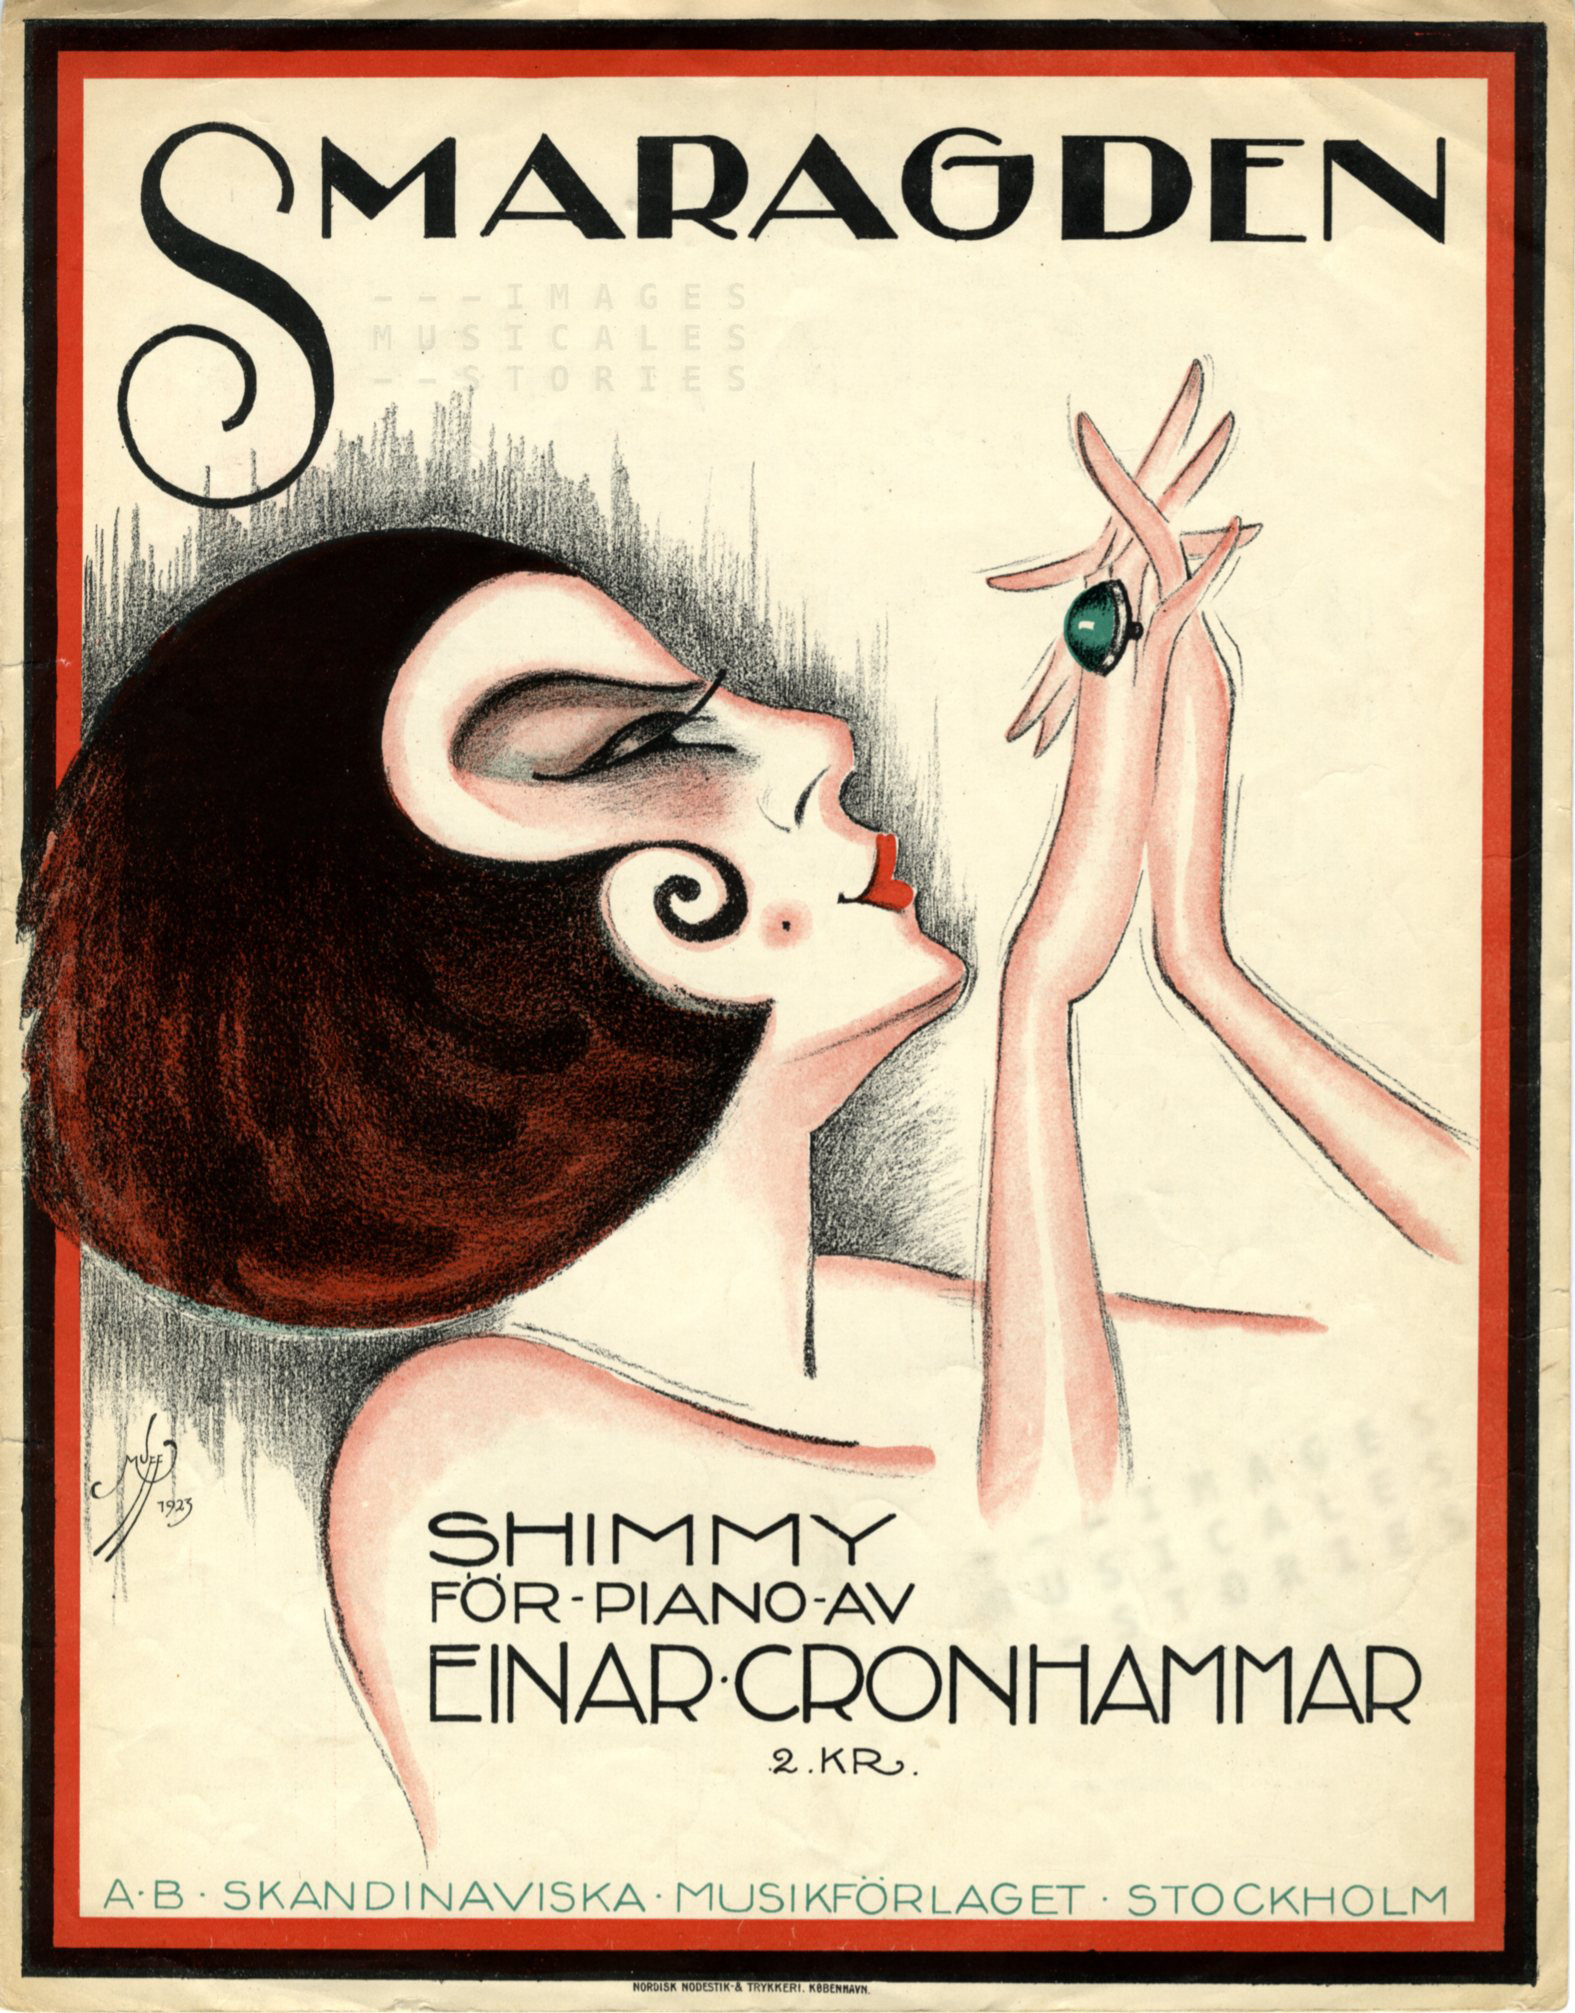 'Smaragden', music by Einar Cronhammar (1923) - click image to enlarge